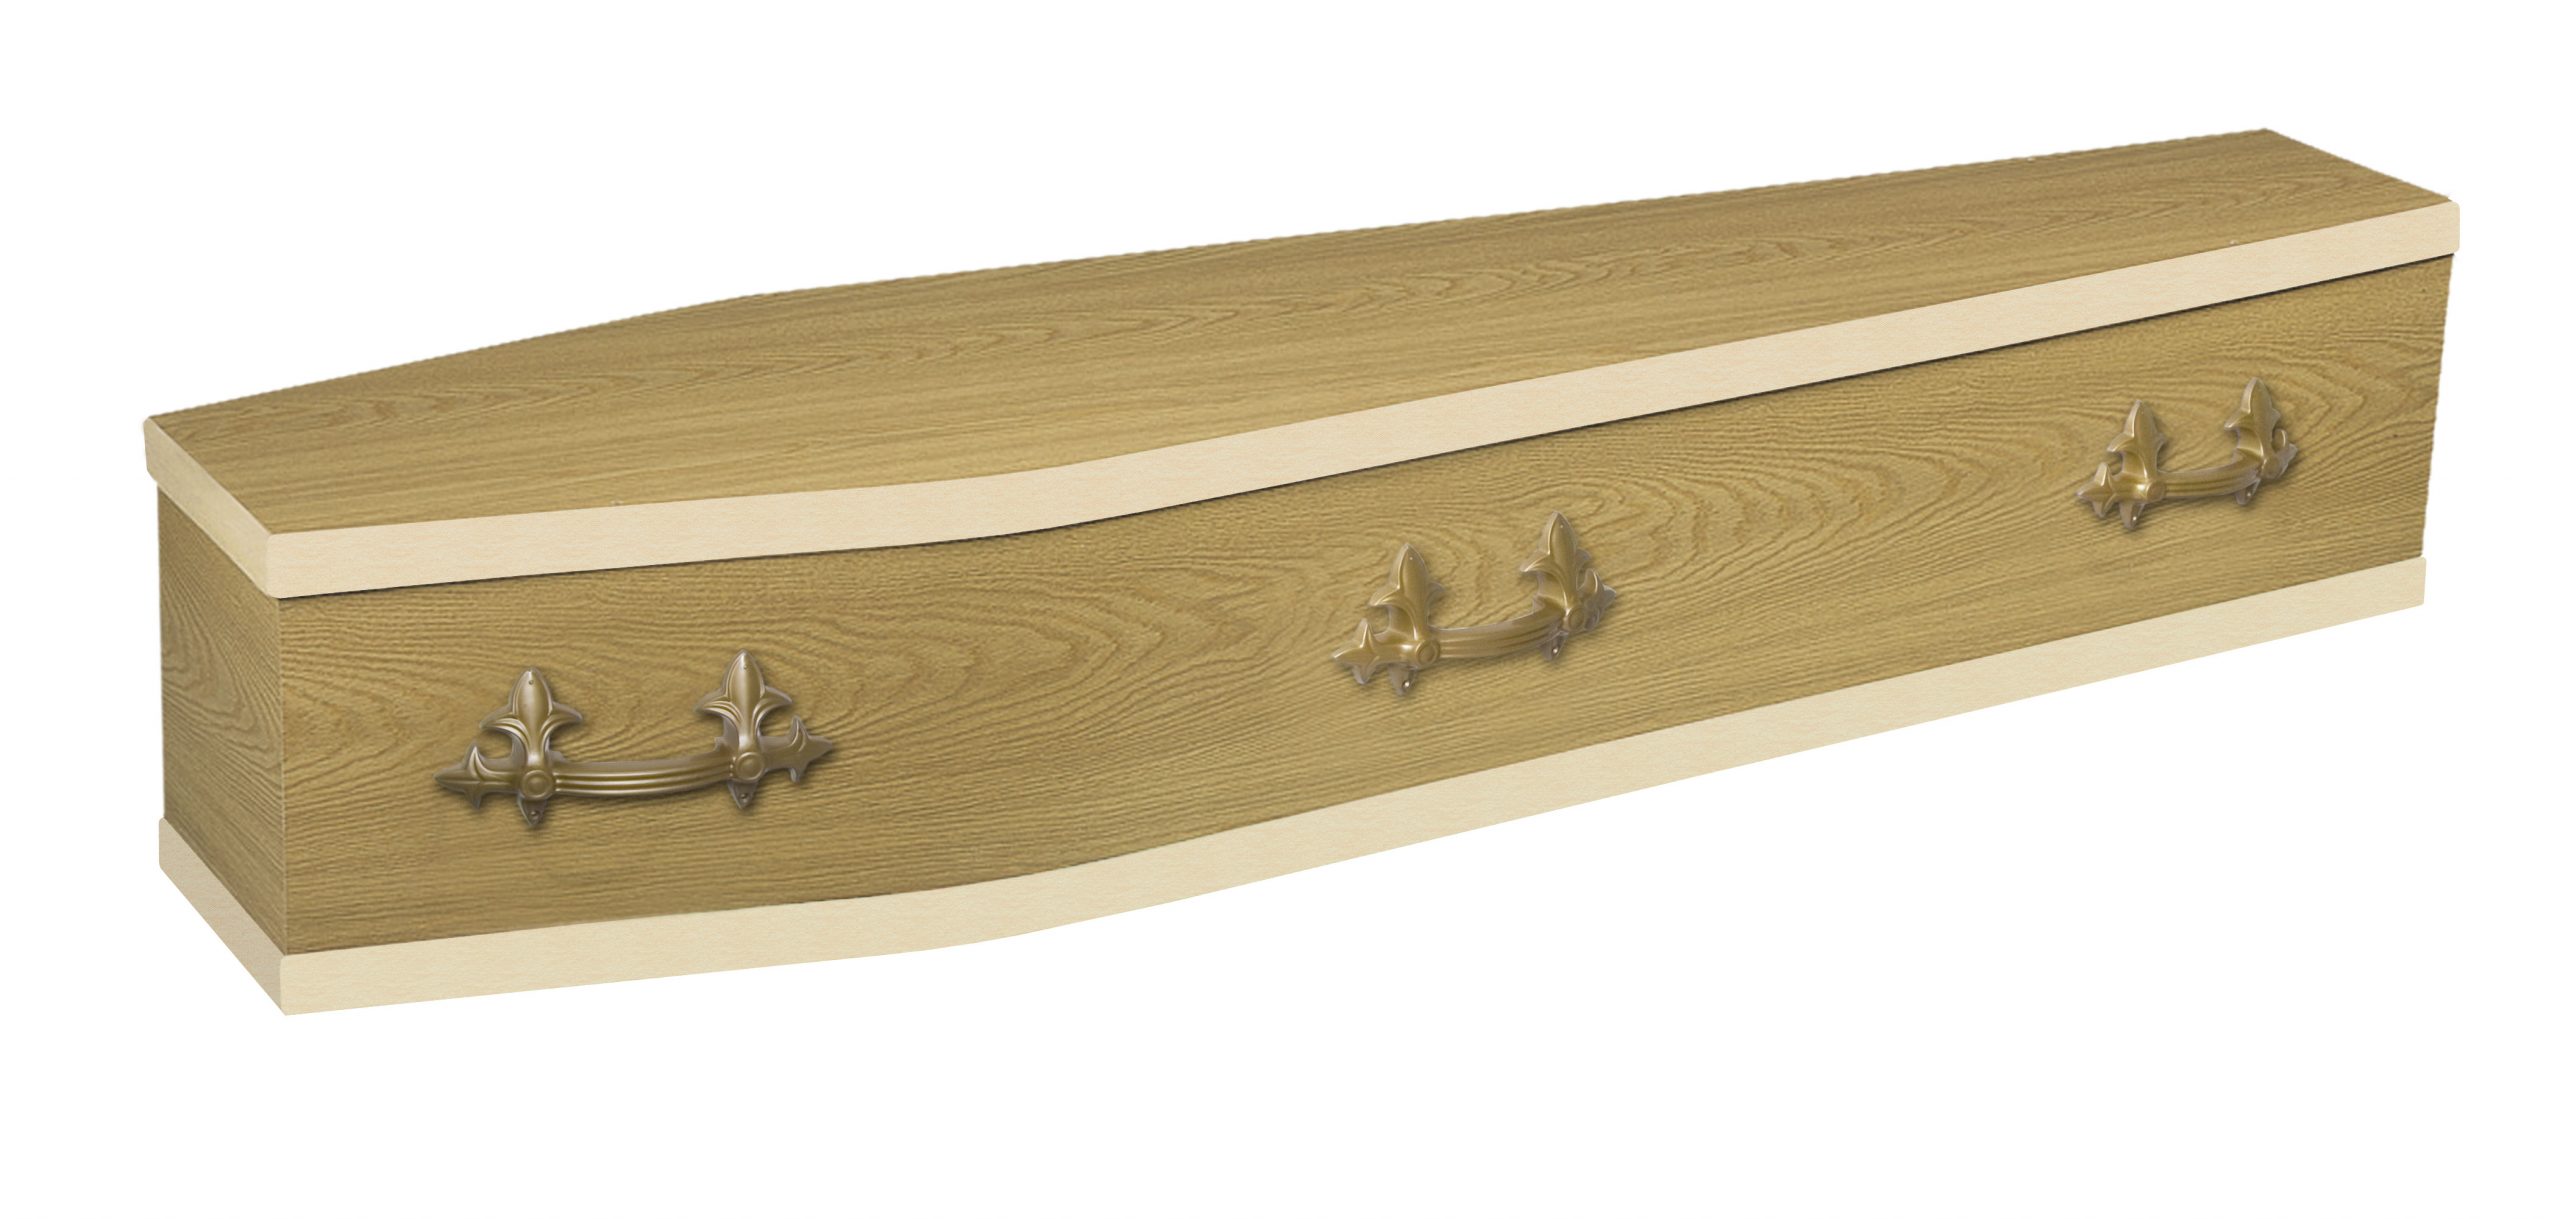 Basic coffin